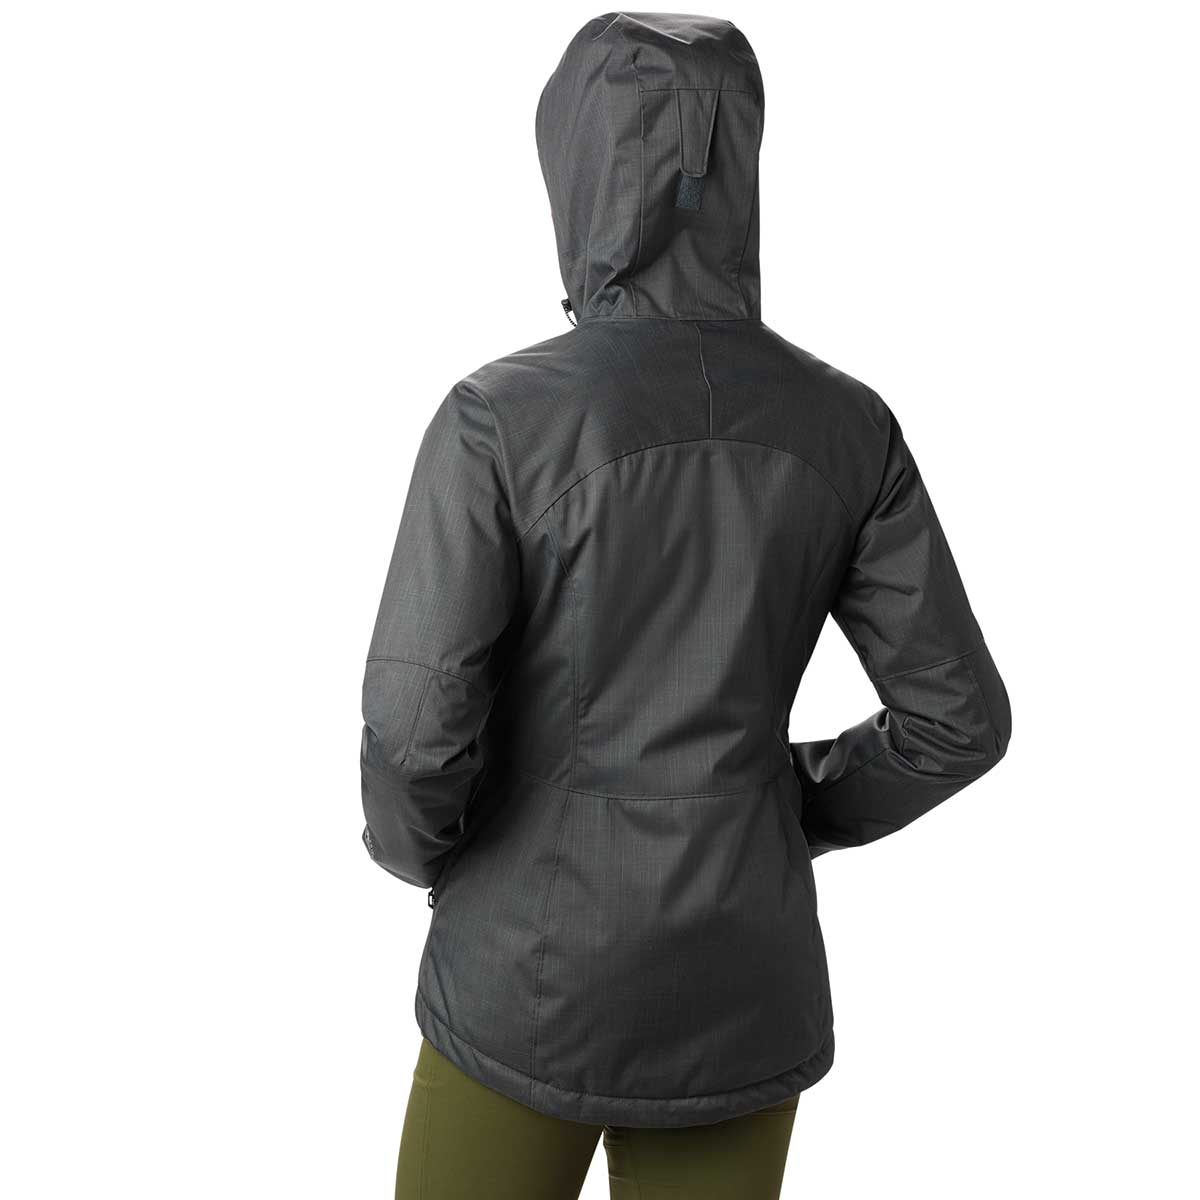 Columbia Women's Top Pine Insulated Rain Jacket